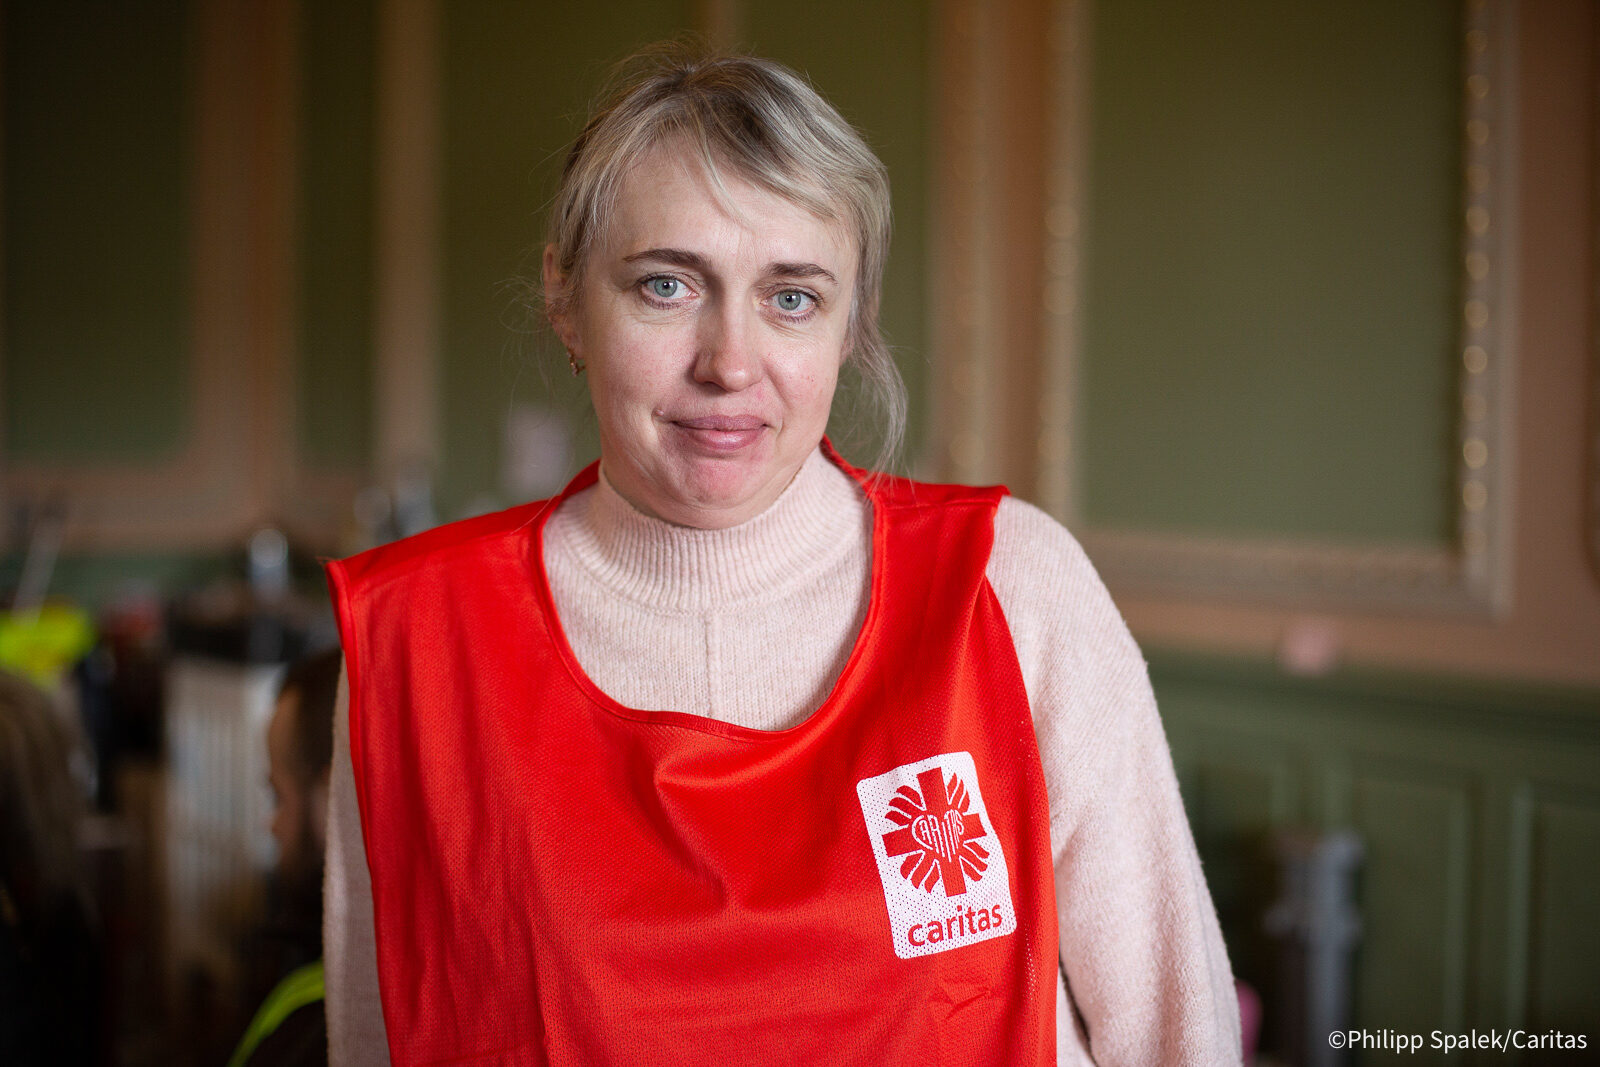 Ukrainian refugee Khalina Stoyanowka works now as a Caritas volunteer